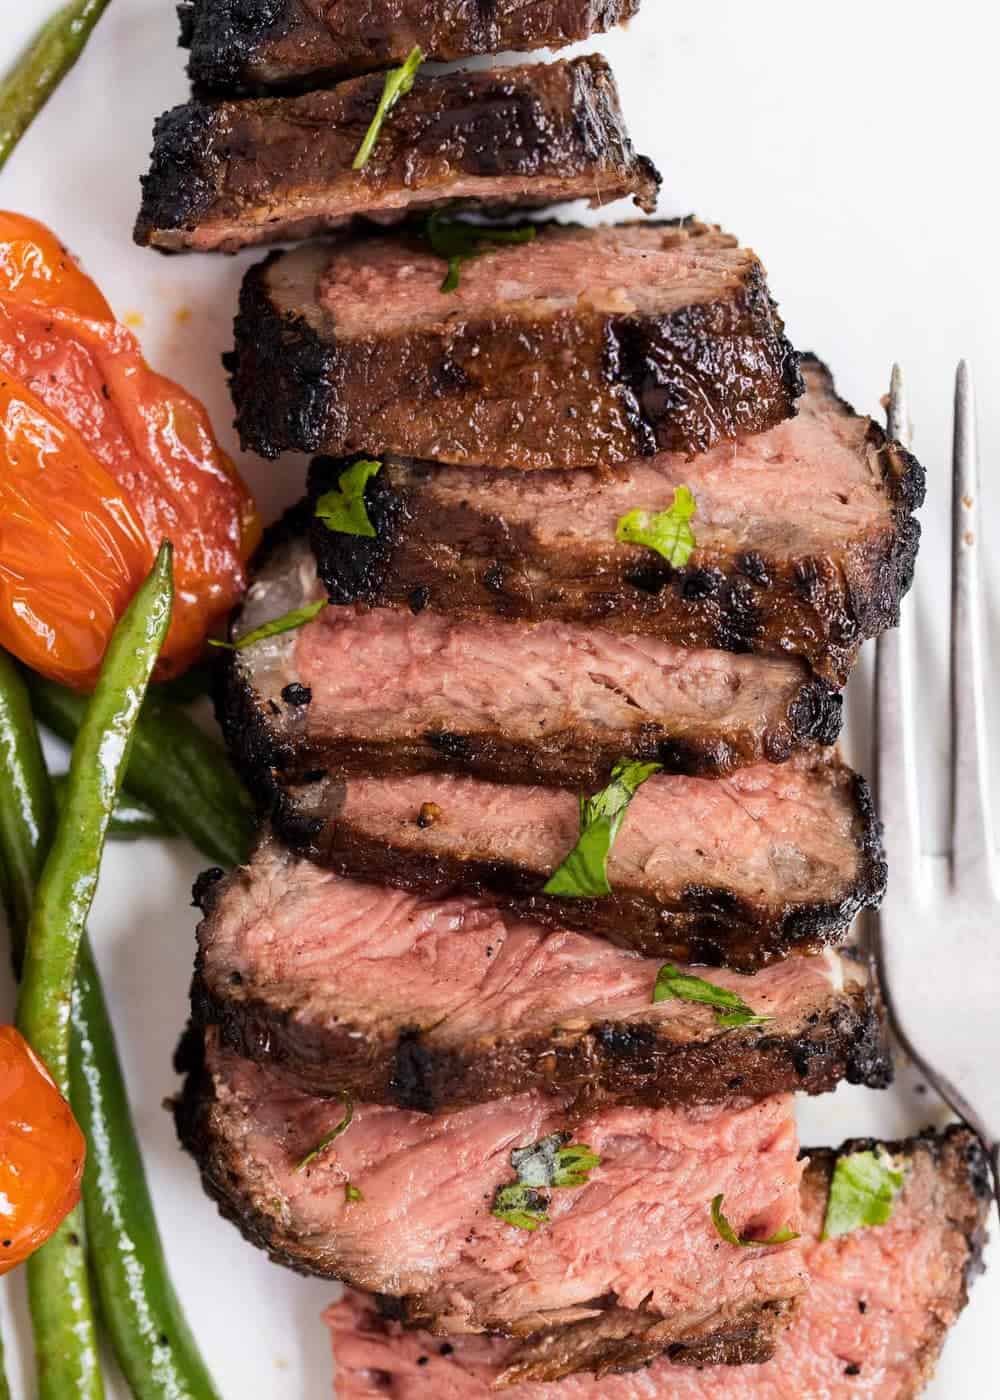 Sliced steak on a plate.